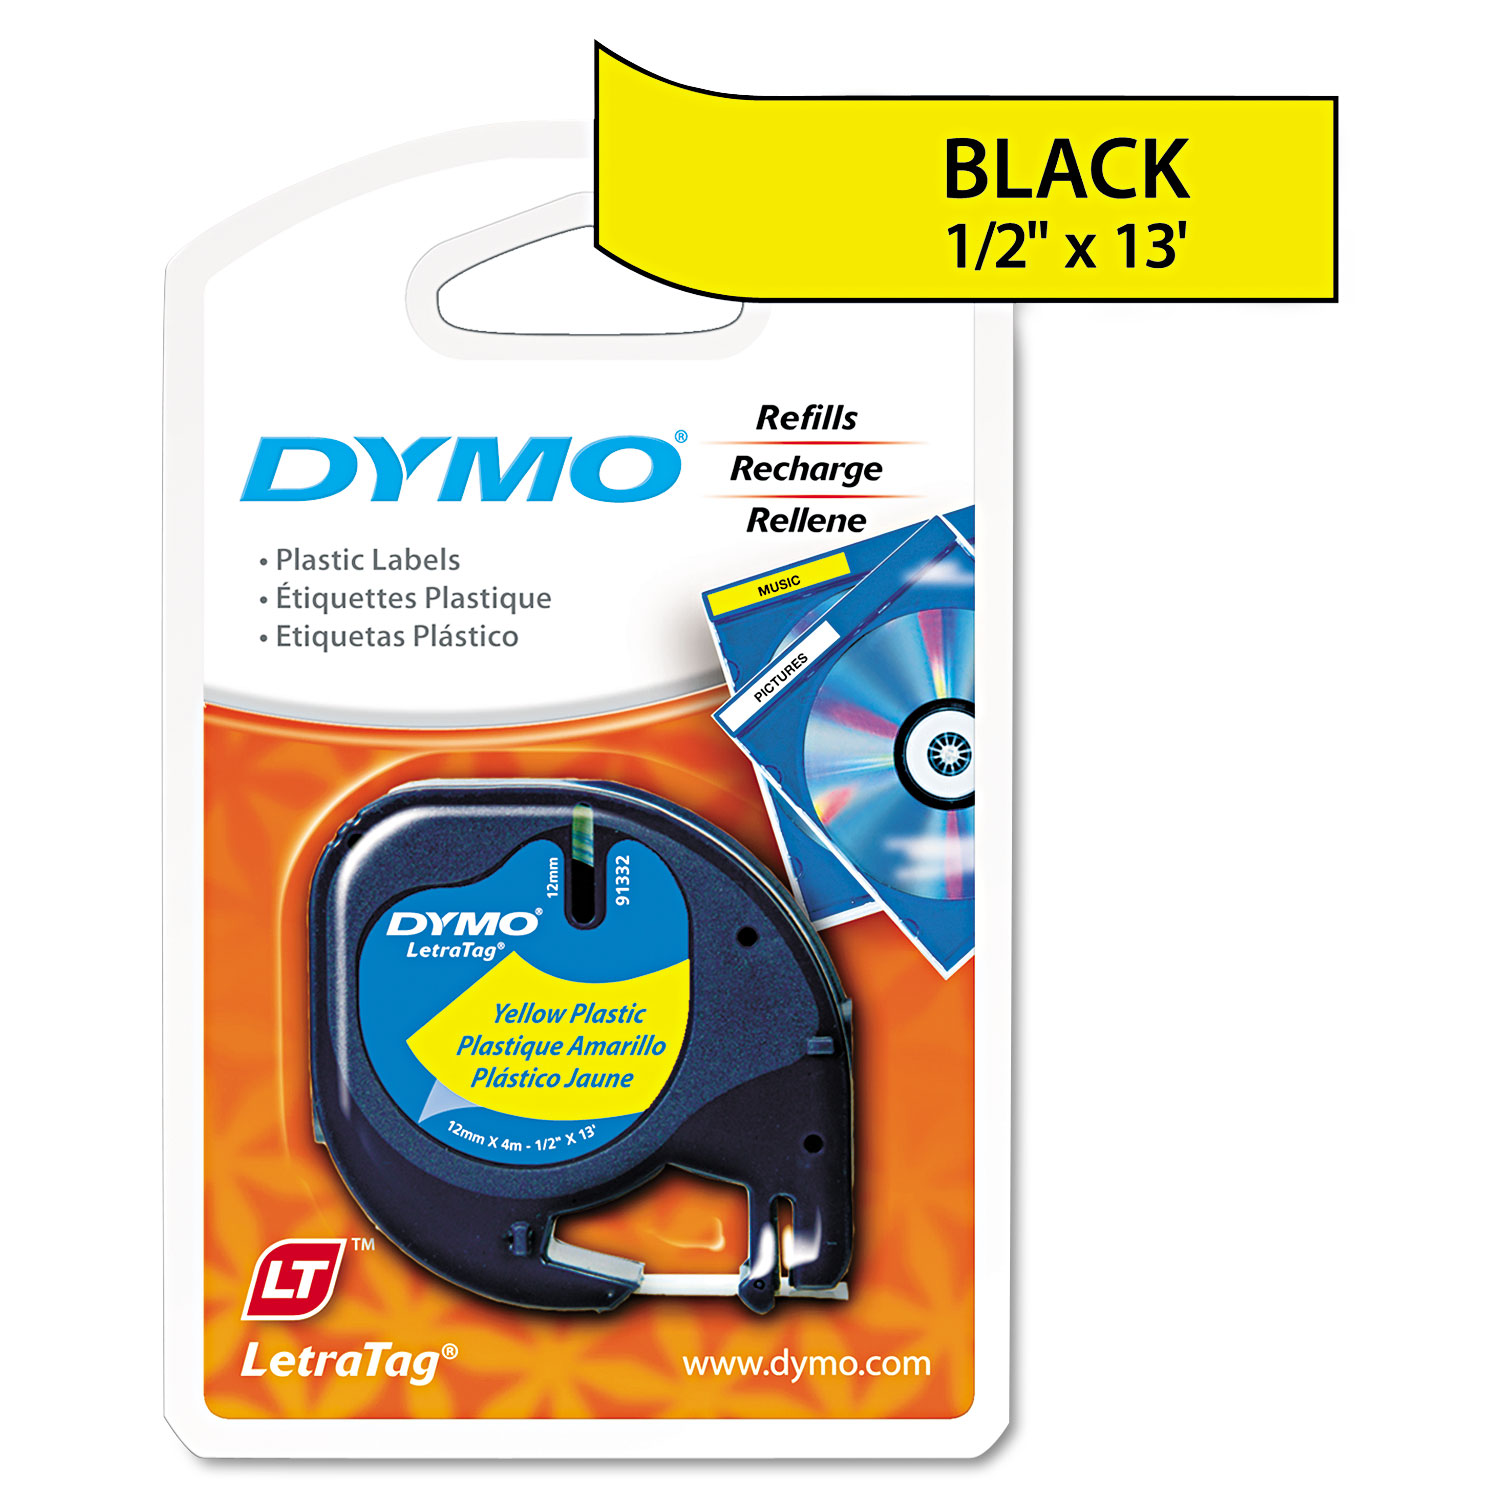  DYMO 91332 LetraTag Plastic Label Tape Cassette, 0.5 x 13 ft, Yellow (DYM91332) 